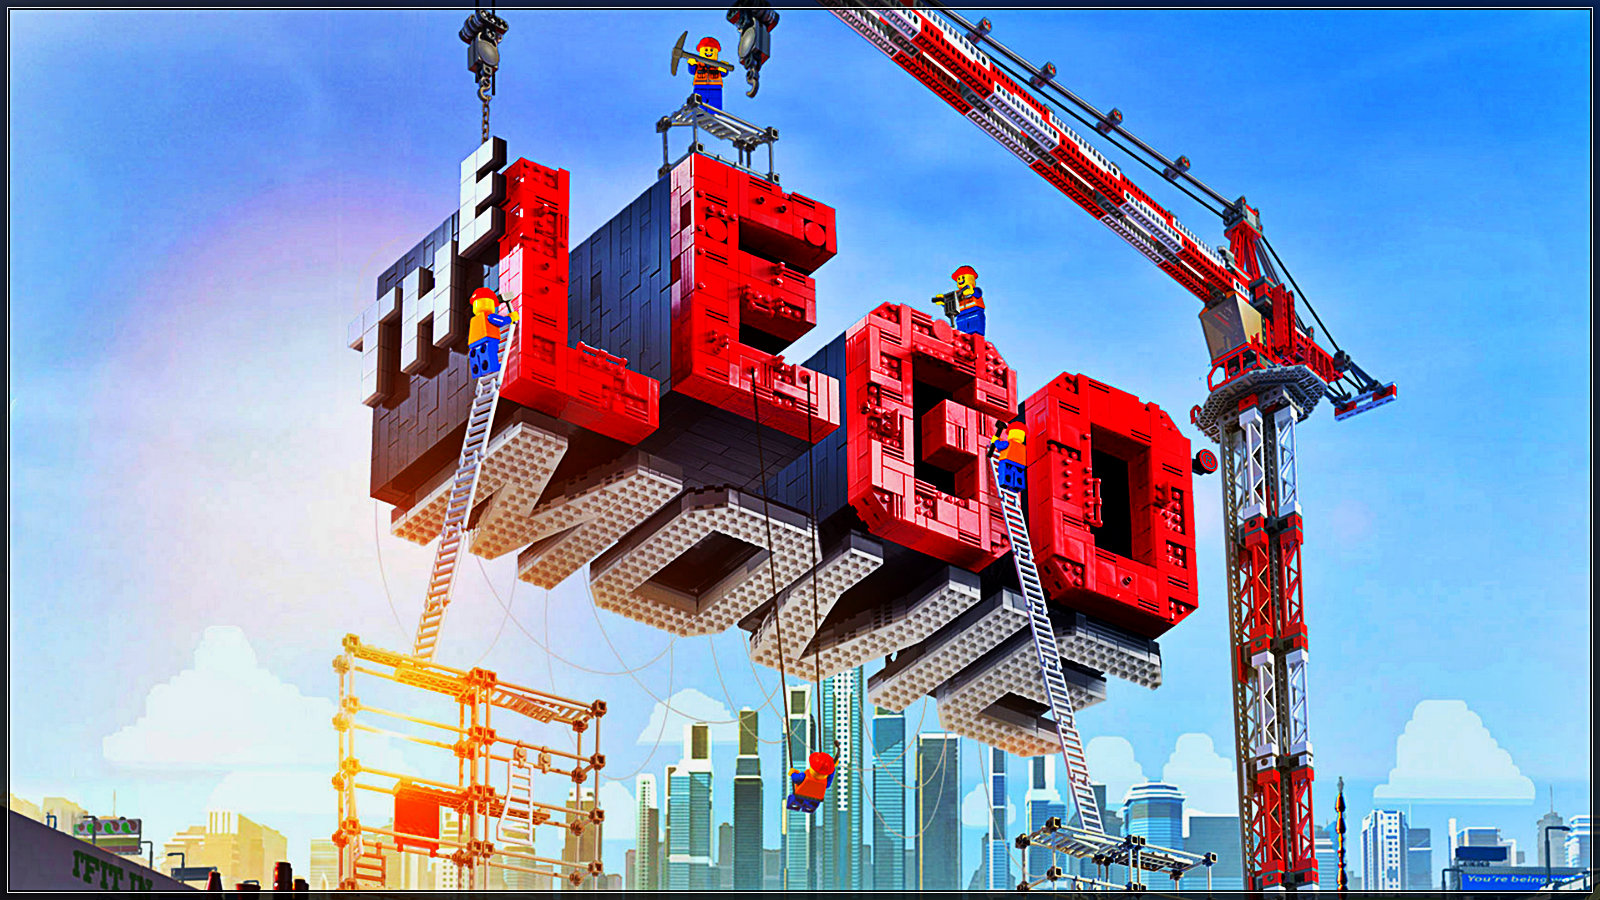 The Lego Movie 2014 - Lego Wallpaper (36540231) - Fanpop